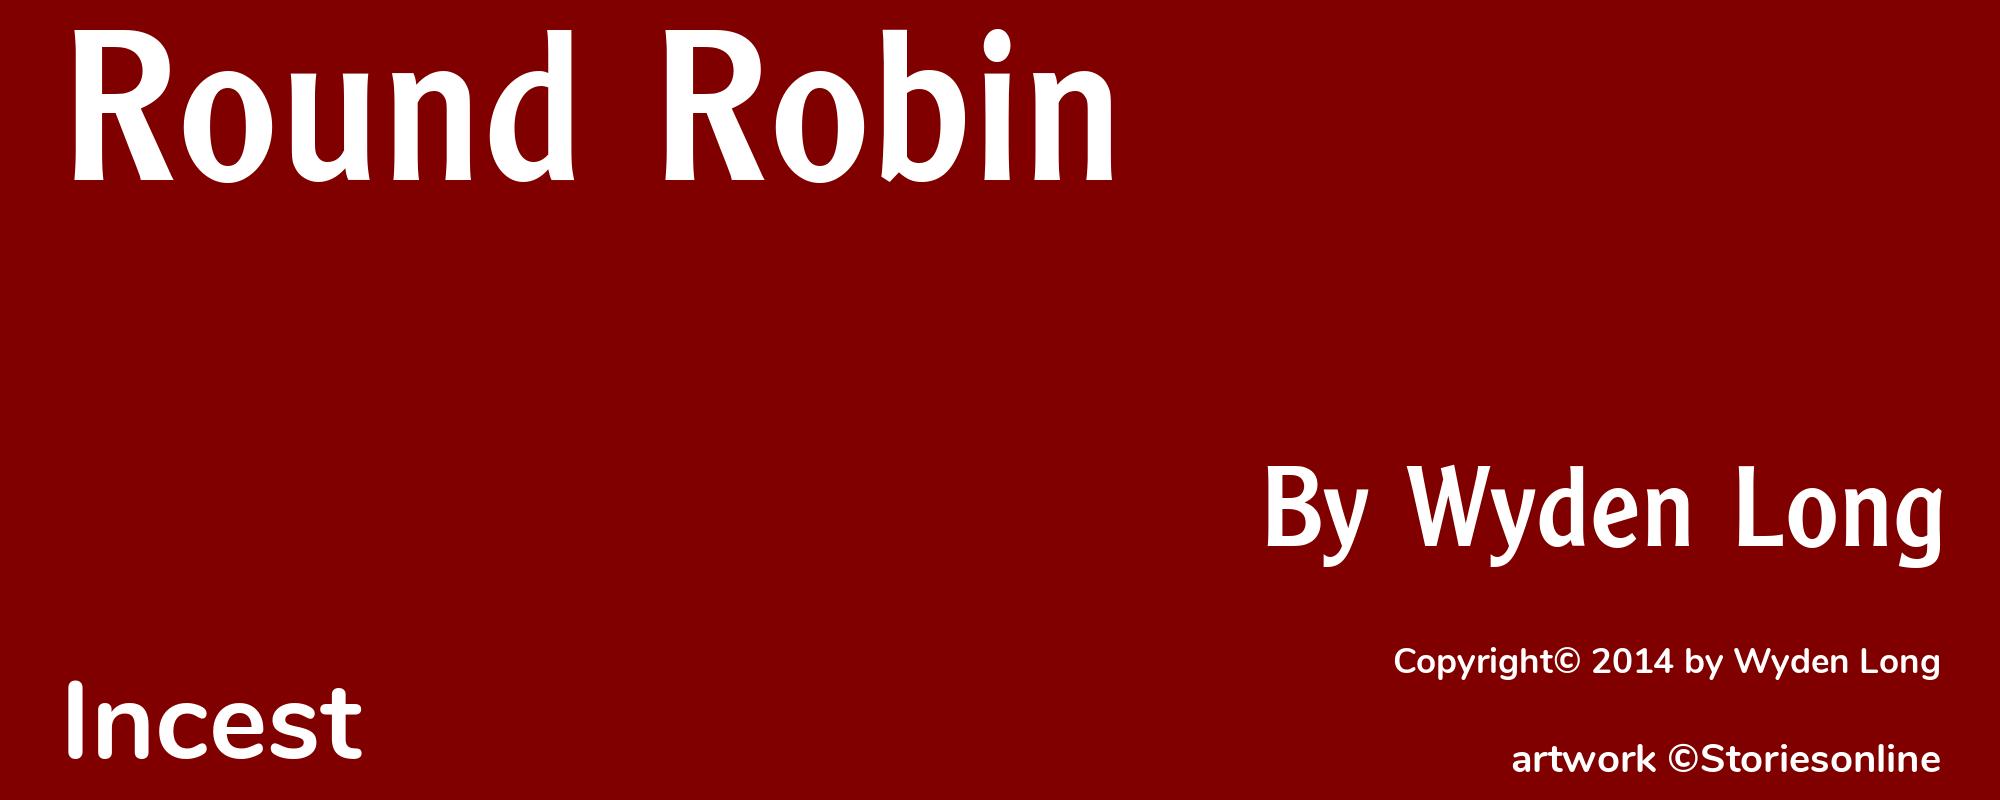 Round Robin - Cover